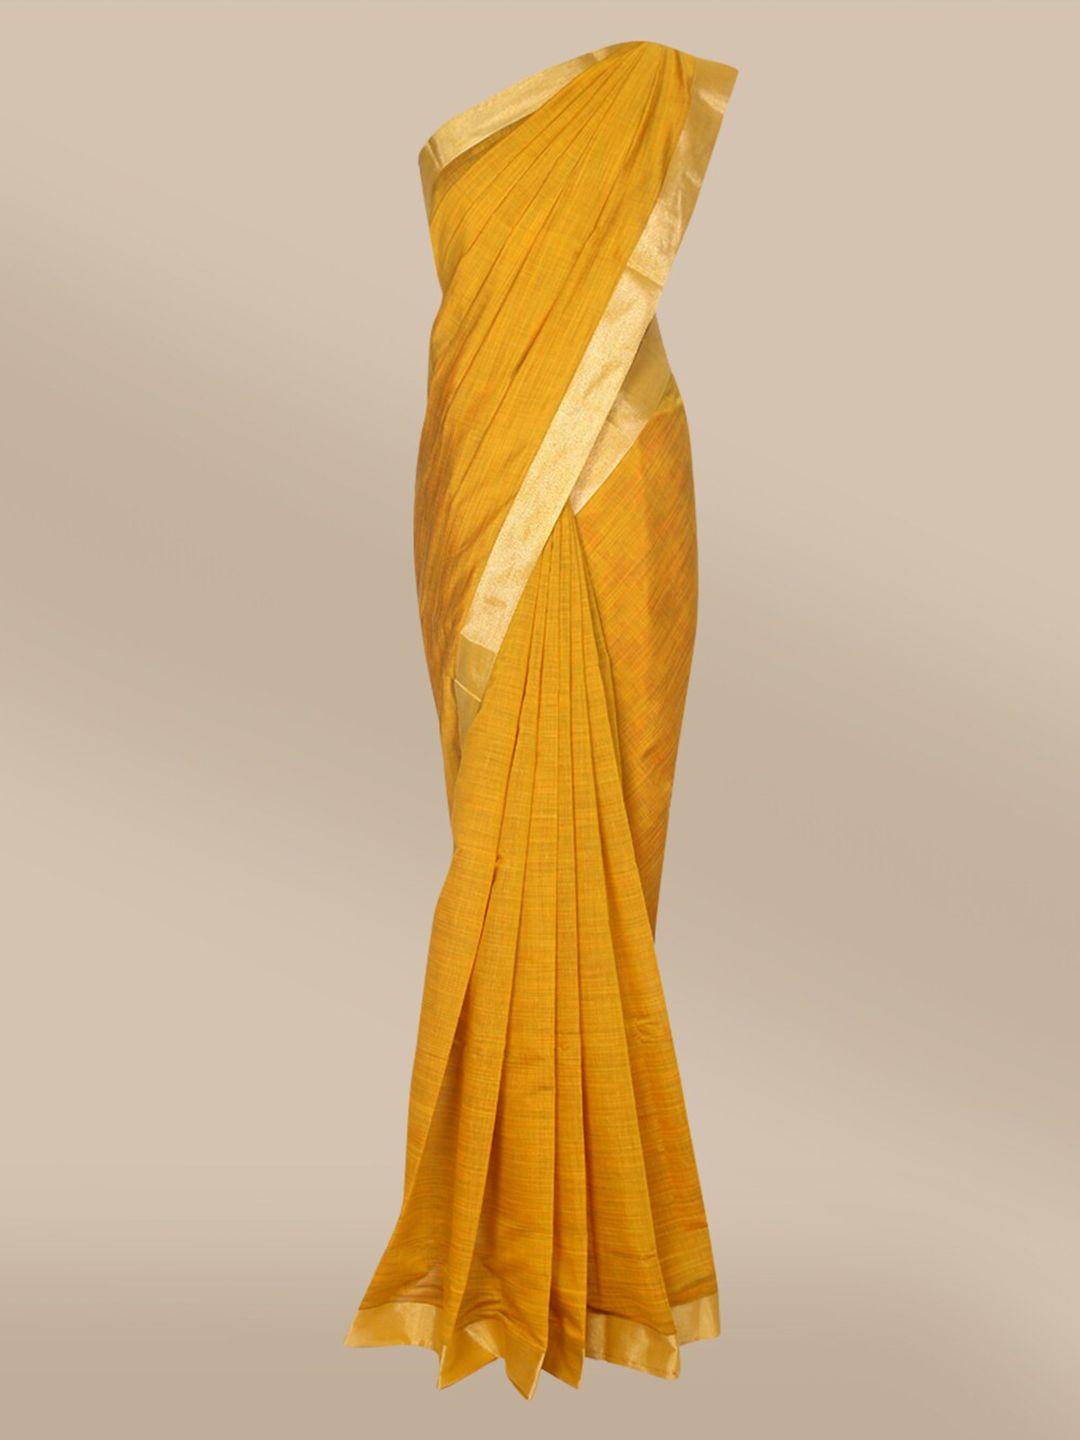 the chennai silks mustard & gold-toned zari saree